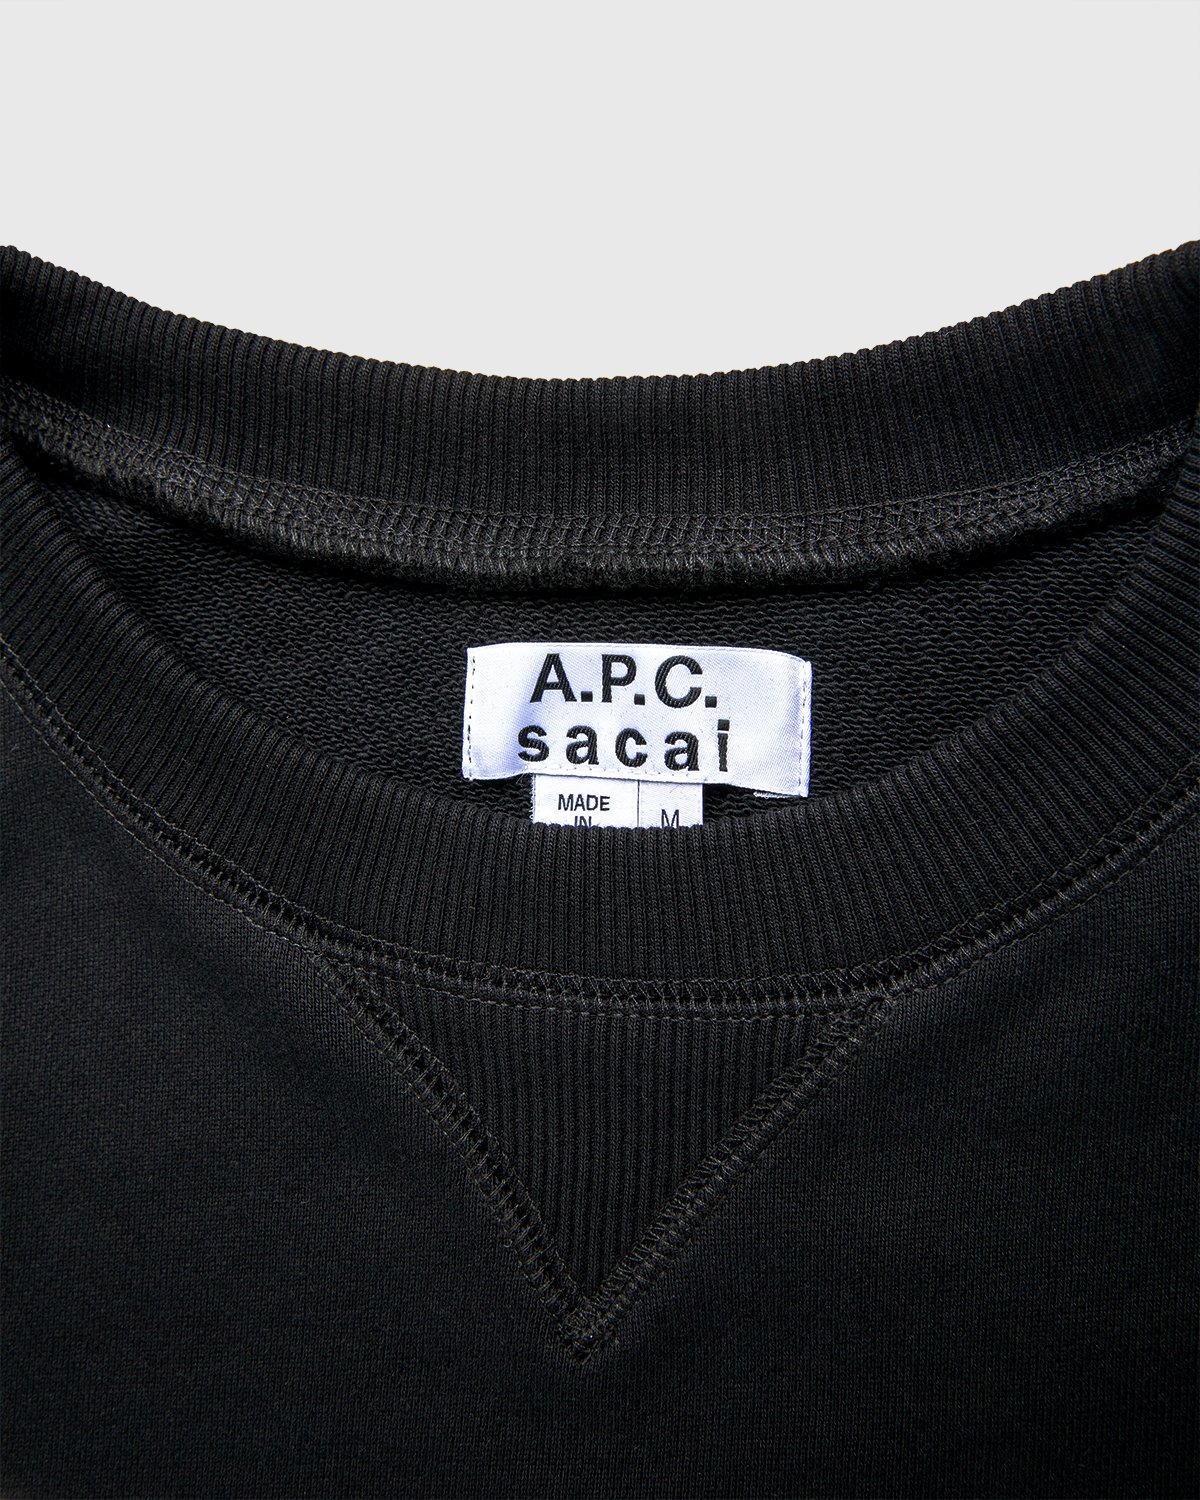 A.P.C. x Sacai - Tani Sweater Black - Clothing - Black - Image 5